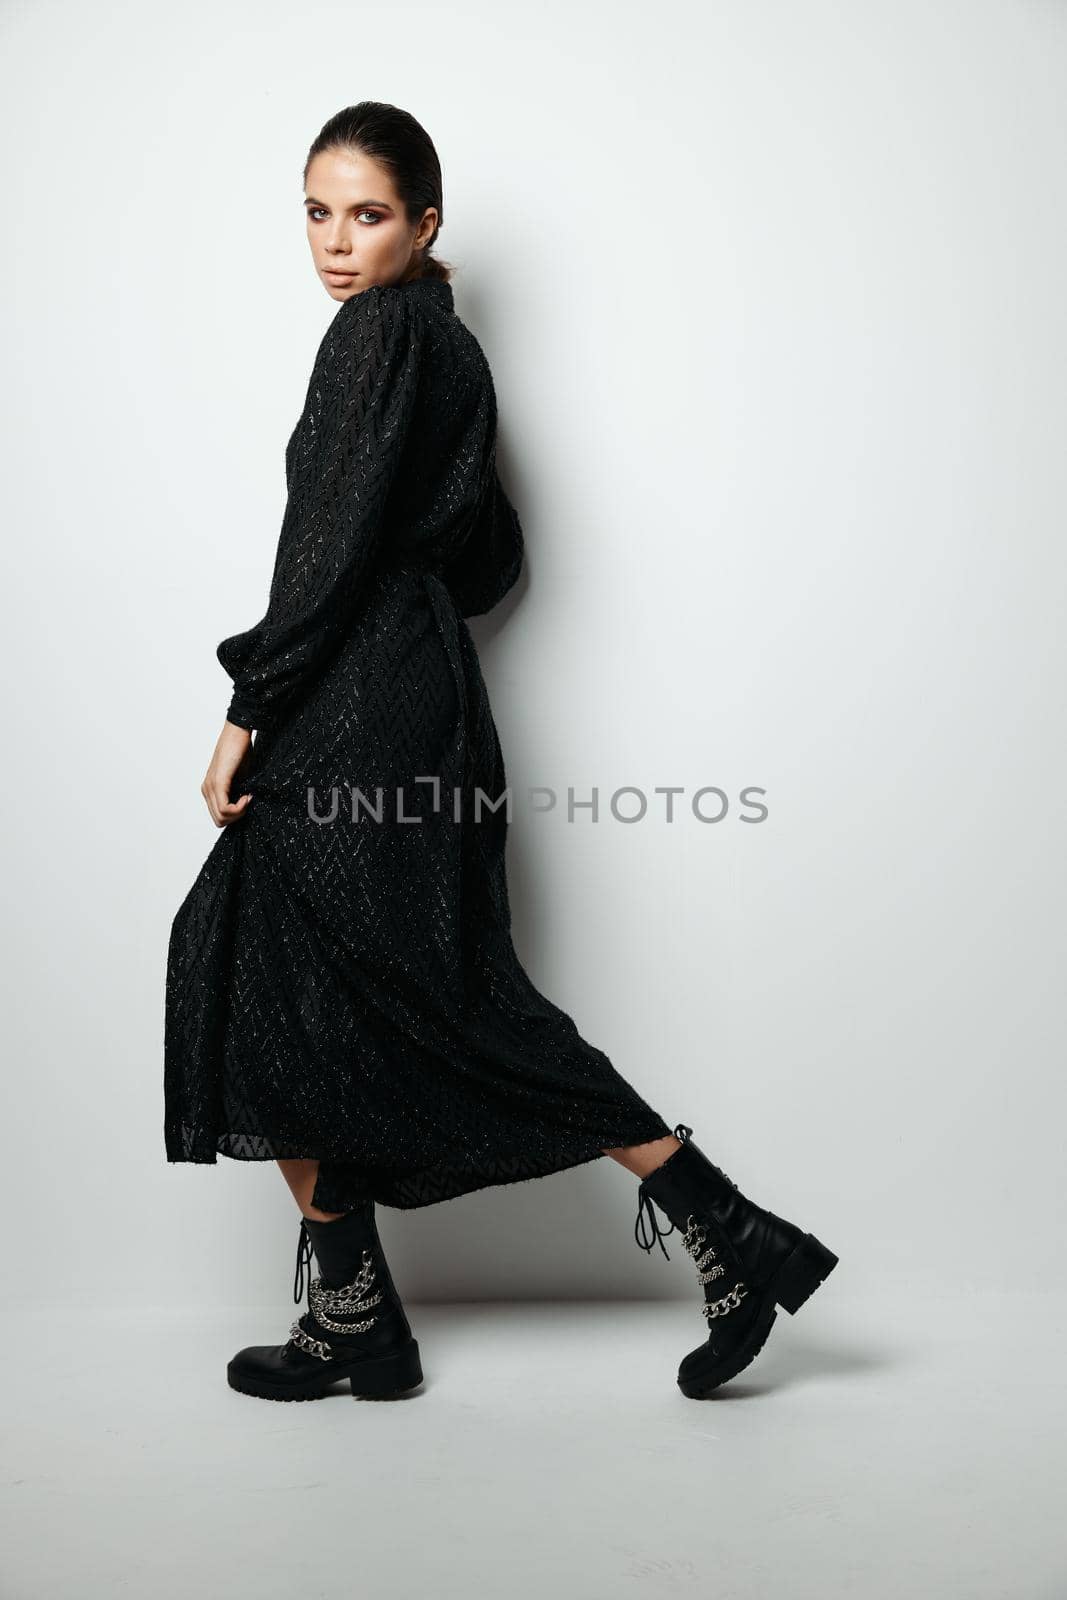 brunette bright makeup black dress glamor model. High quality photo